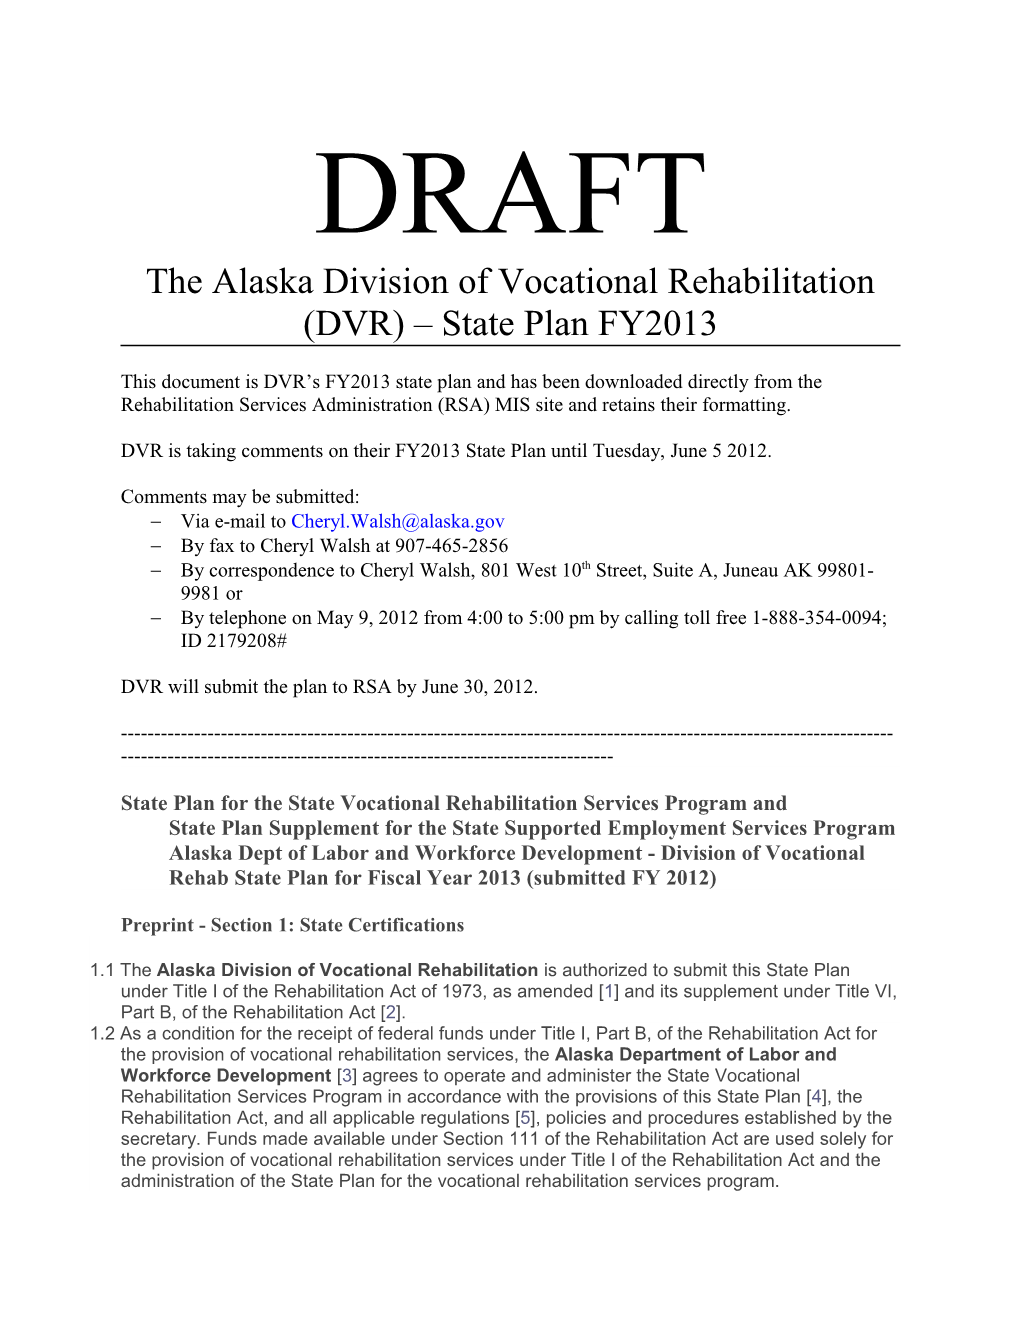 The Alaska Division of Vocational Rehabilitation (DVR) State Plan FY2013